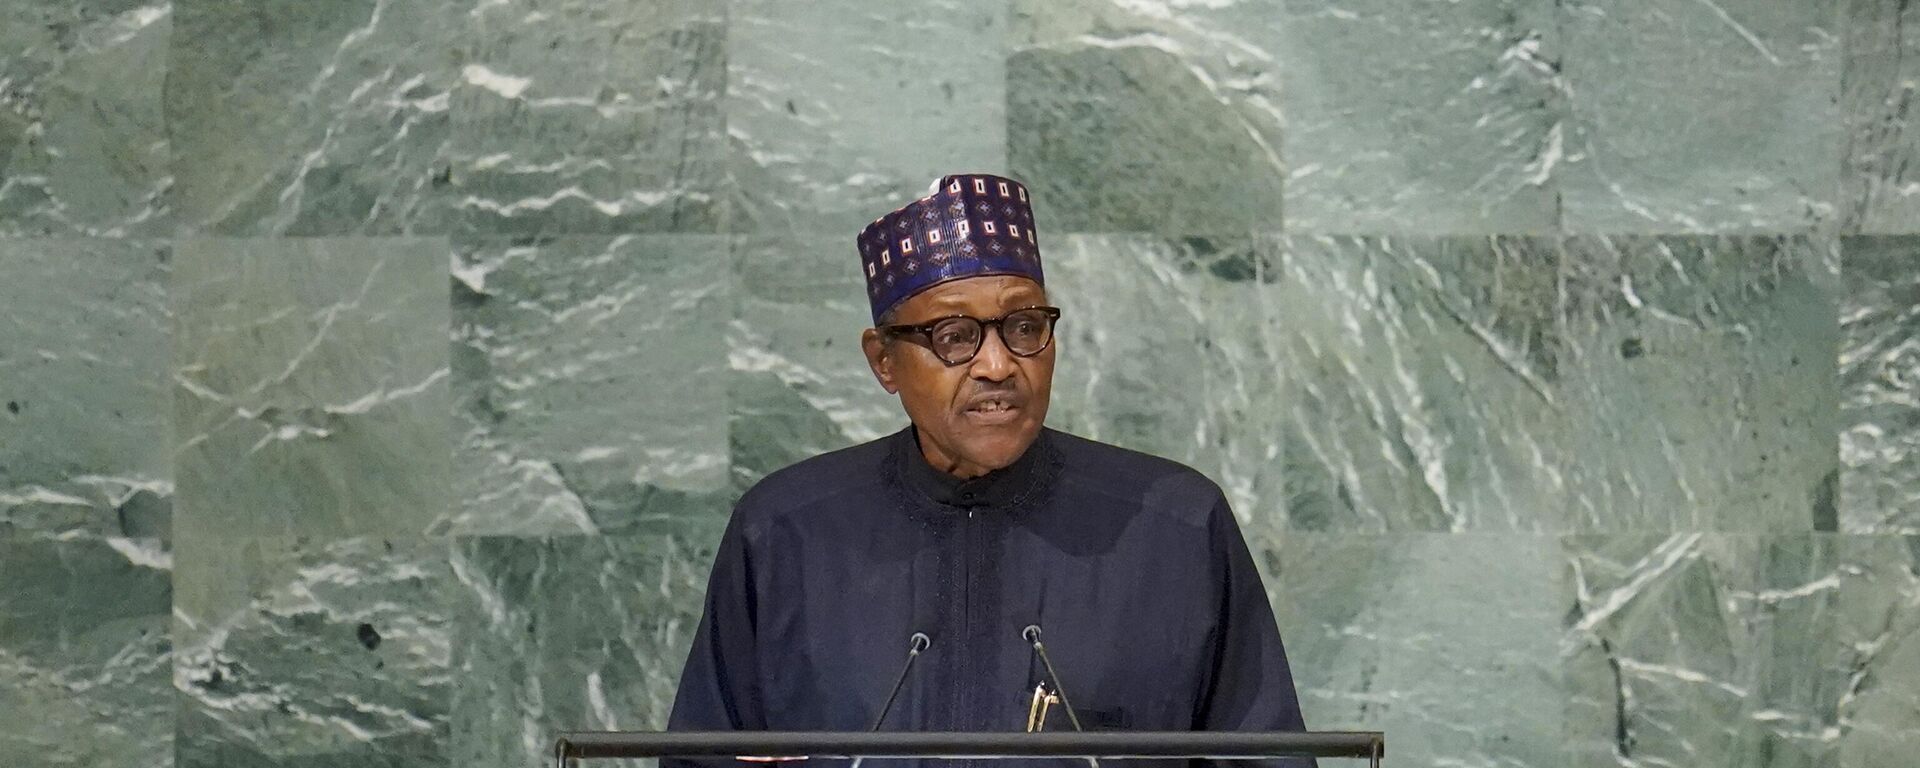 President of Nigeria Muhammadu Buhari addresses the 77th session of the United Nations General Assembly, Wednesday, Sept. 21, 2022 at U.N. headquarters - Sputnik International, 1920, 07.03.2023